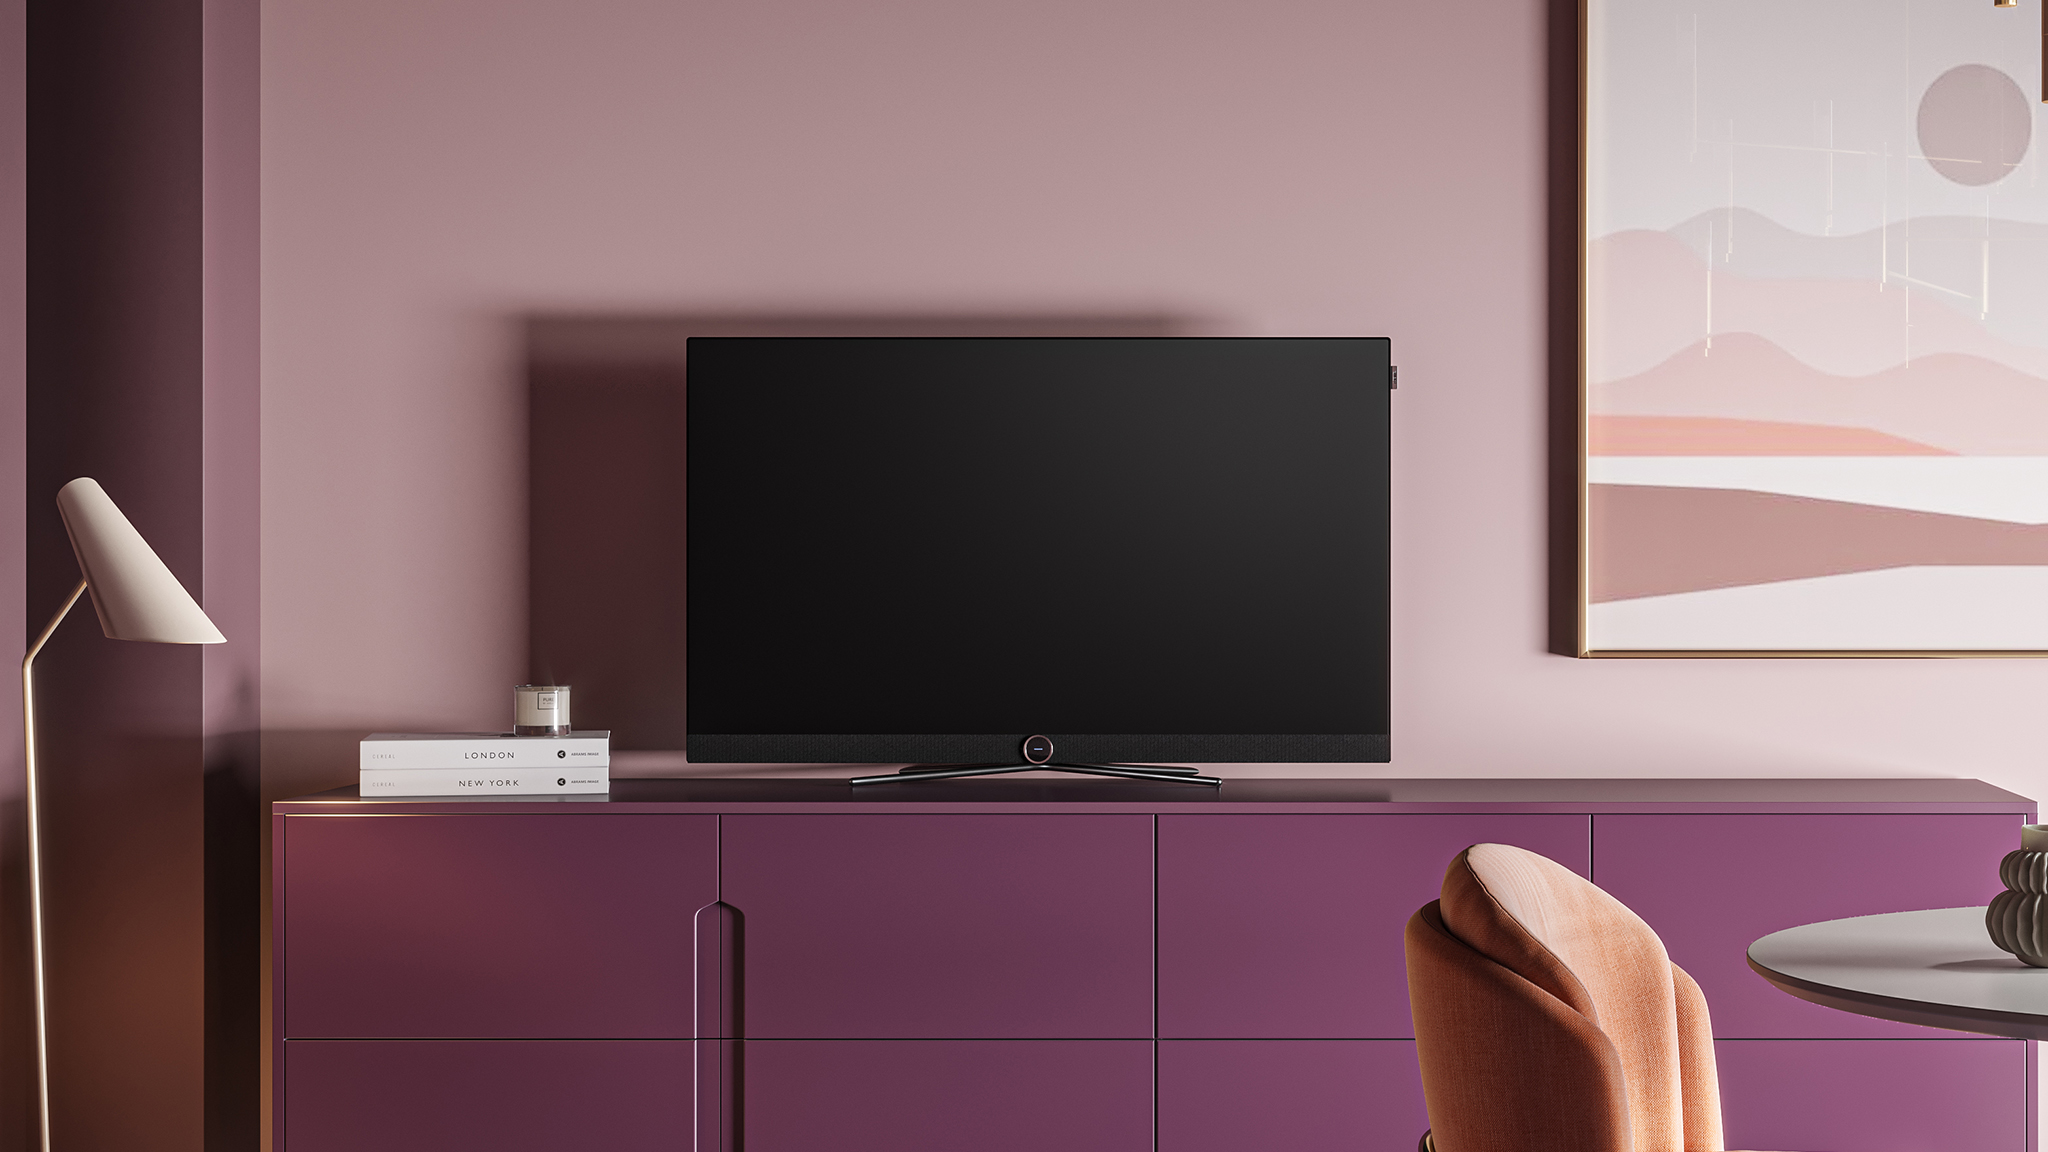 Loewe bild c: Smarter LED-TV mit Streaming-Tasten - COMPUTER BILD